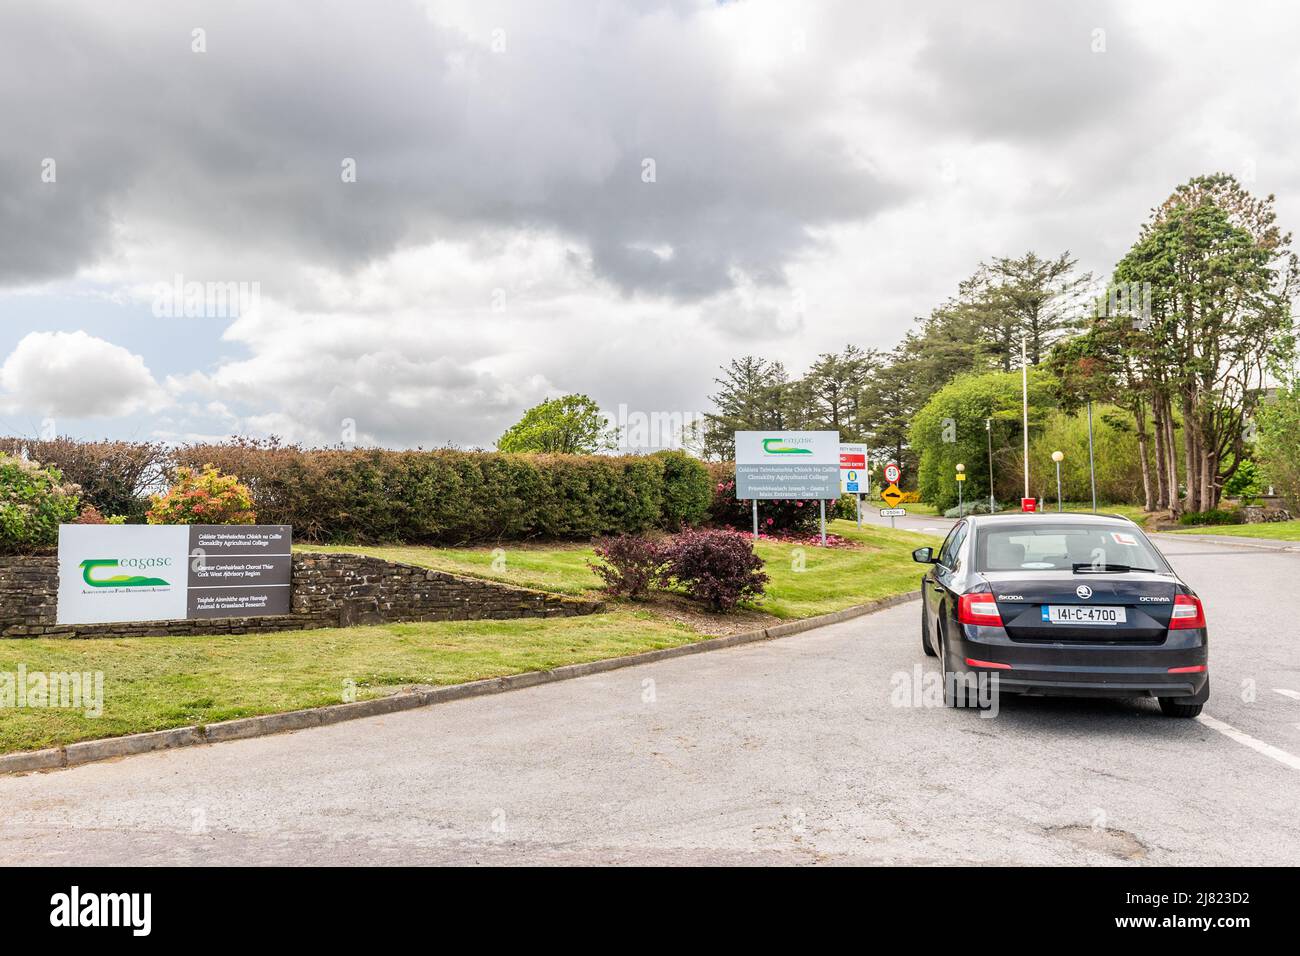 Entrance to Clonakilty Agricultural College, Darrara, Clonakilty, West Cork, Ireland. Stock Photo